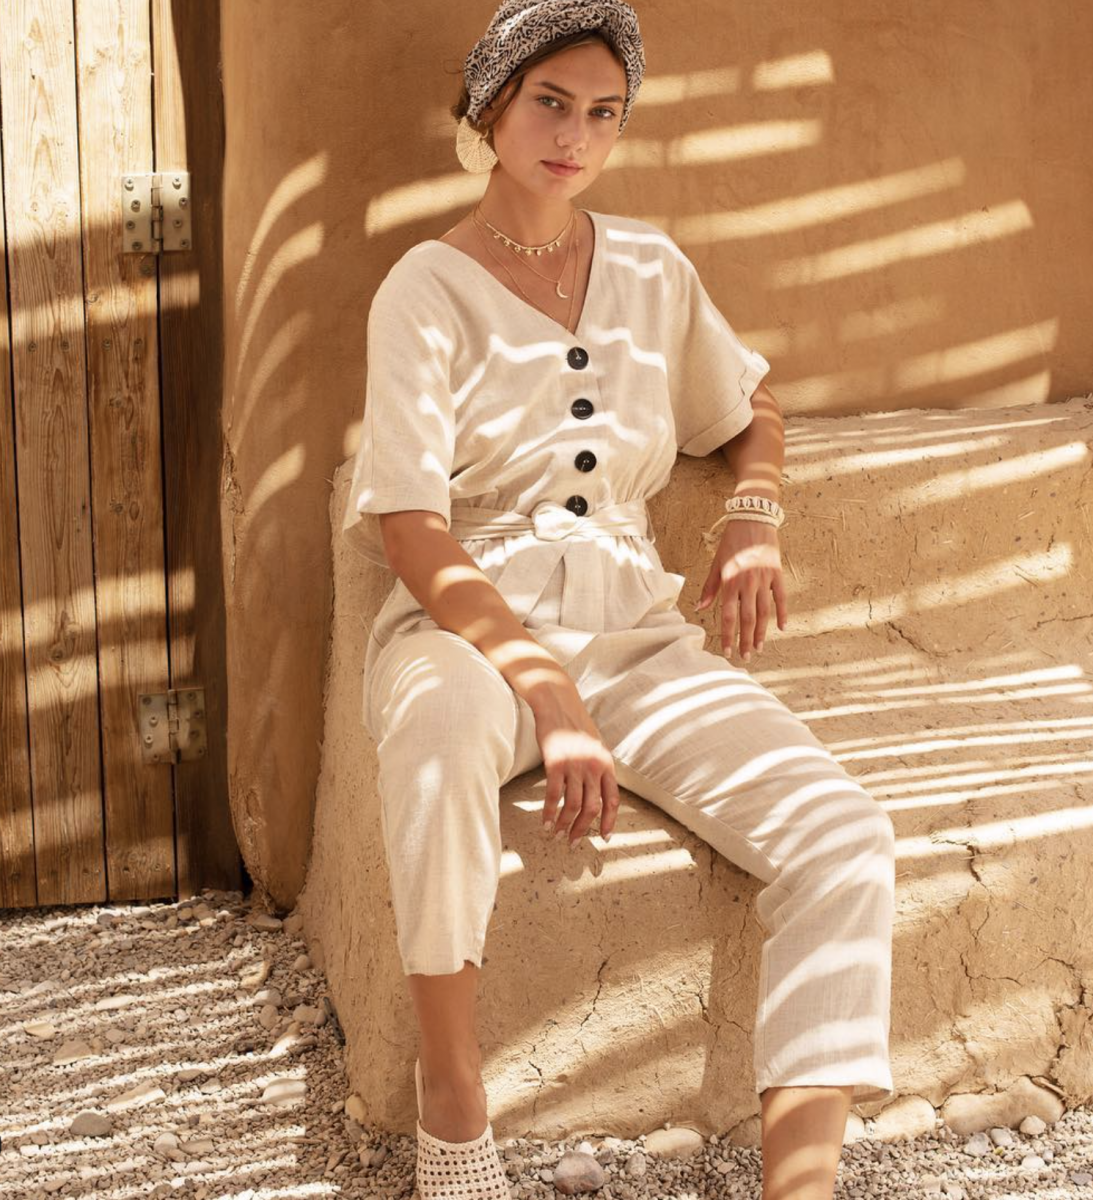 Balistarz-model-Brigita-Maldutyte-portrait-shoot-in-casual-clothing-relaxing-on-a-seat